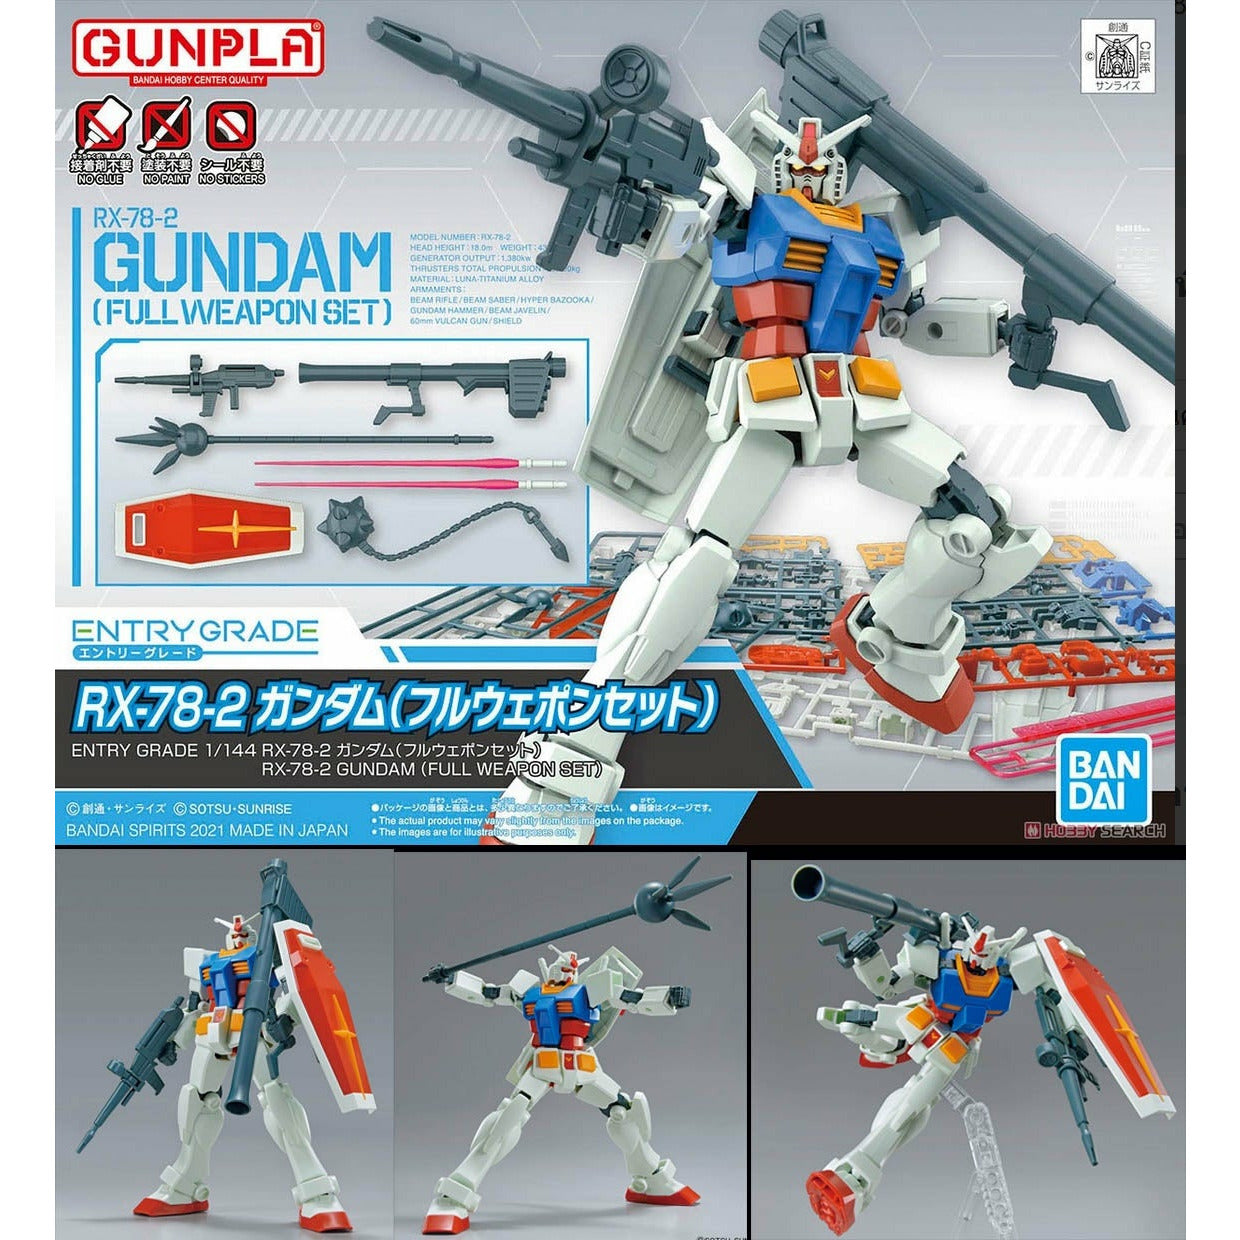 Entry Grade 1/144 RX-78-2 Gundam (Full Weapon Set) #5062033 by Bandai